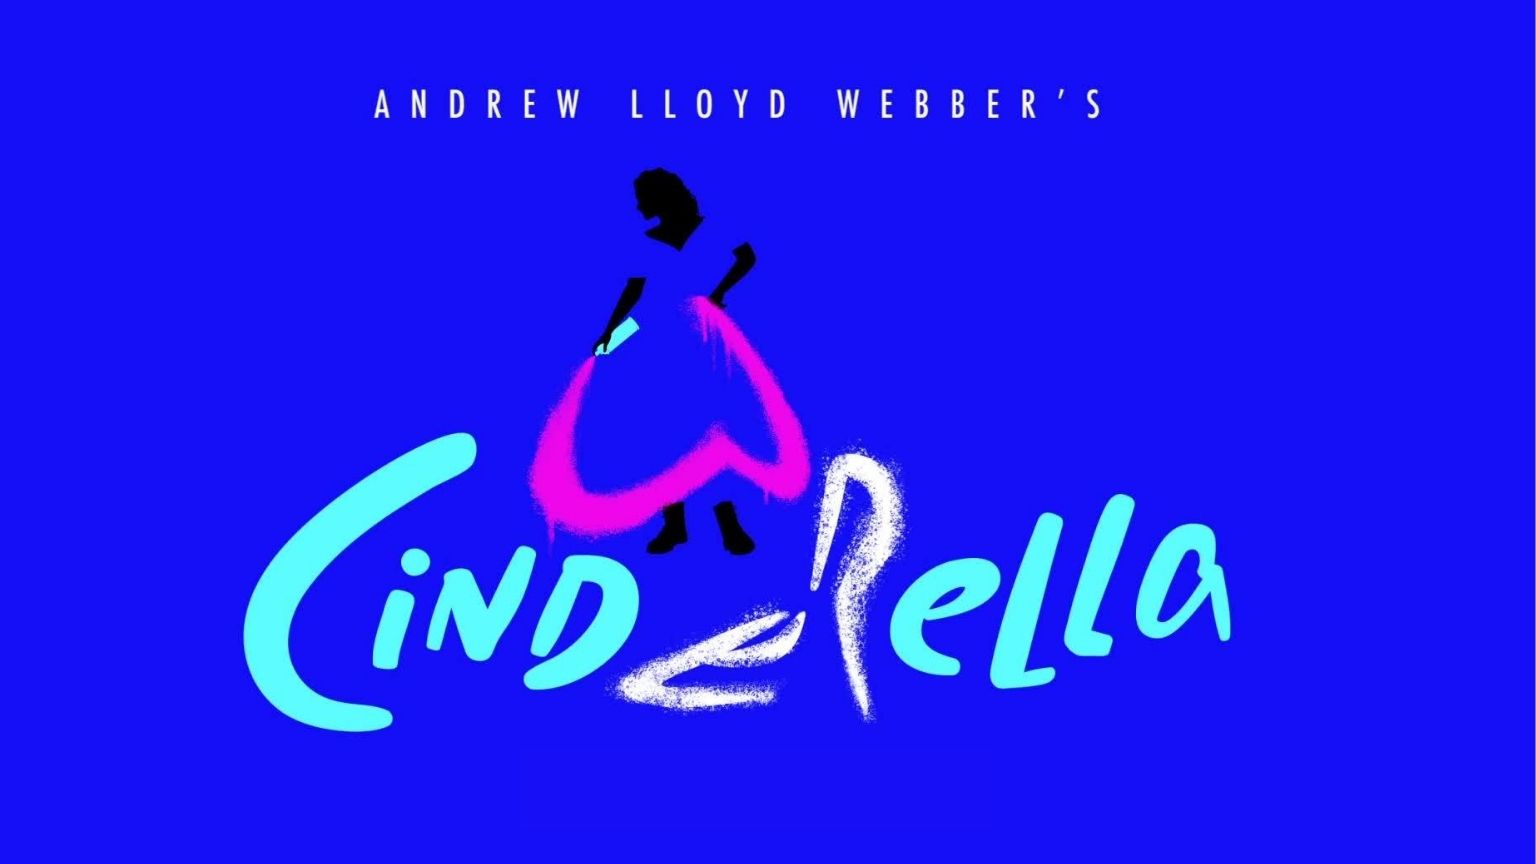 ‘Cinderella’ Cast Album is Now On Spotify!